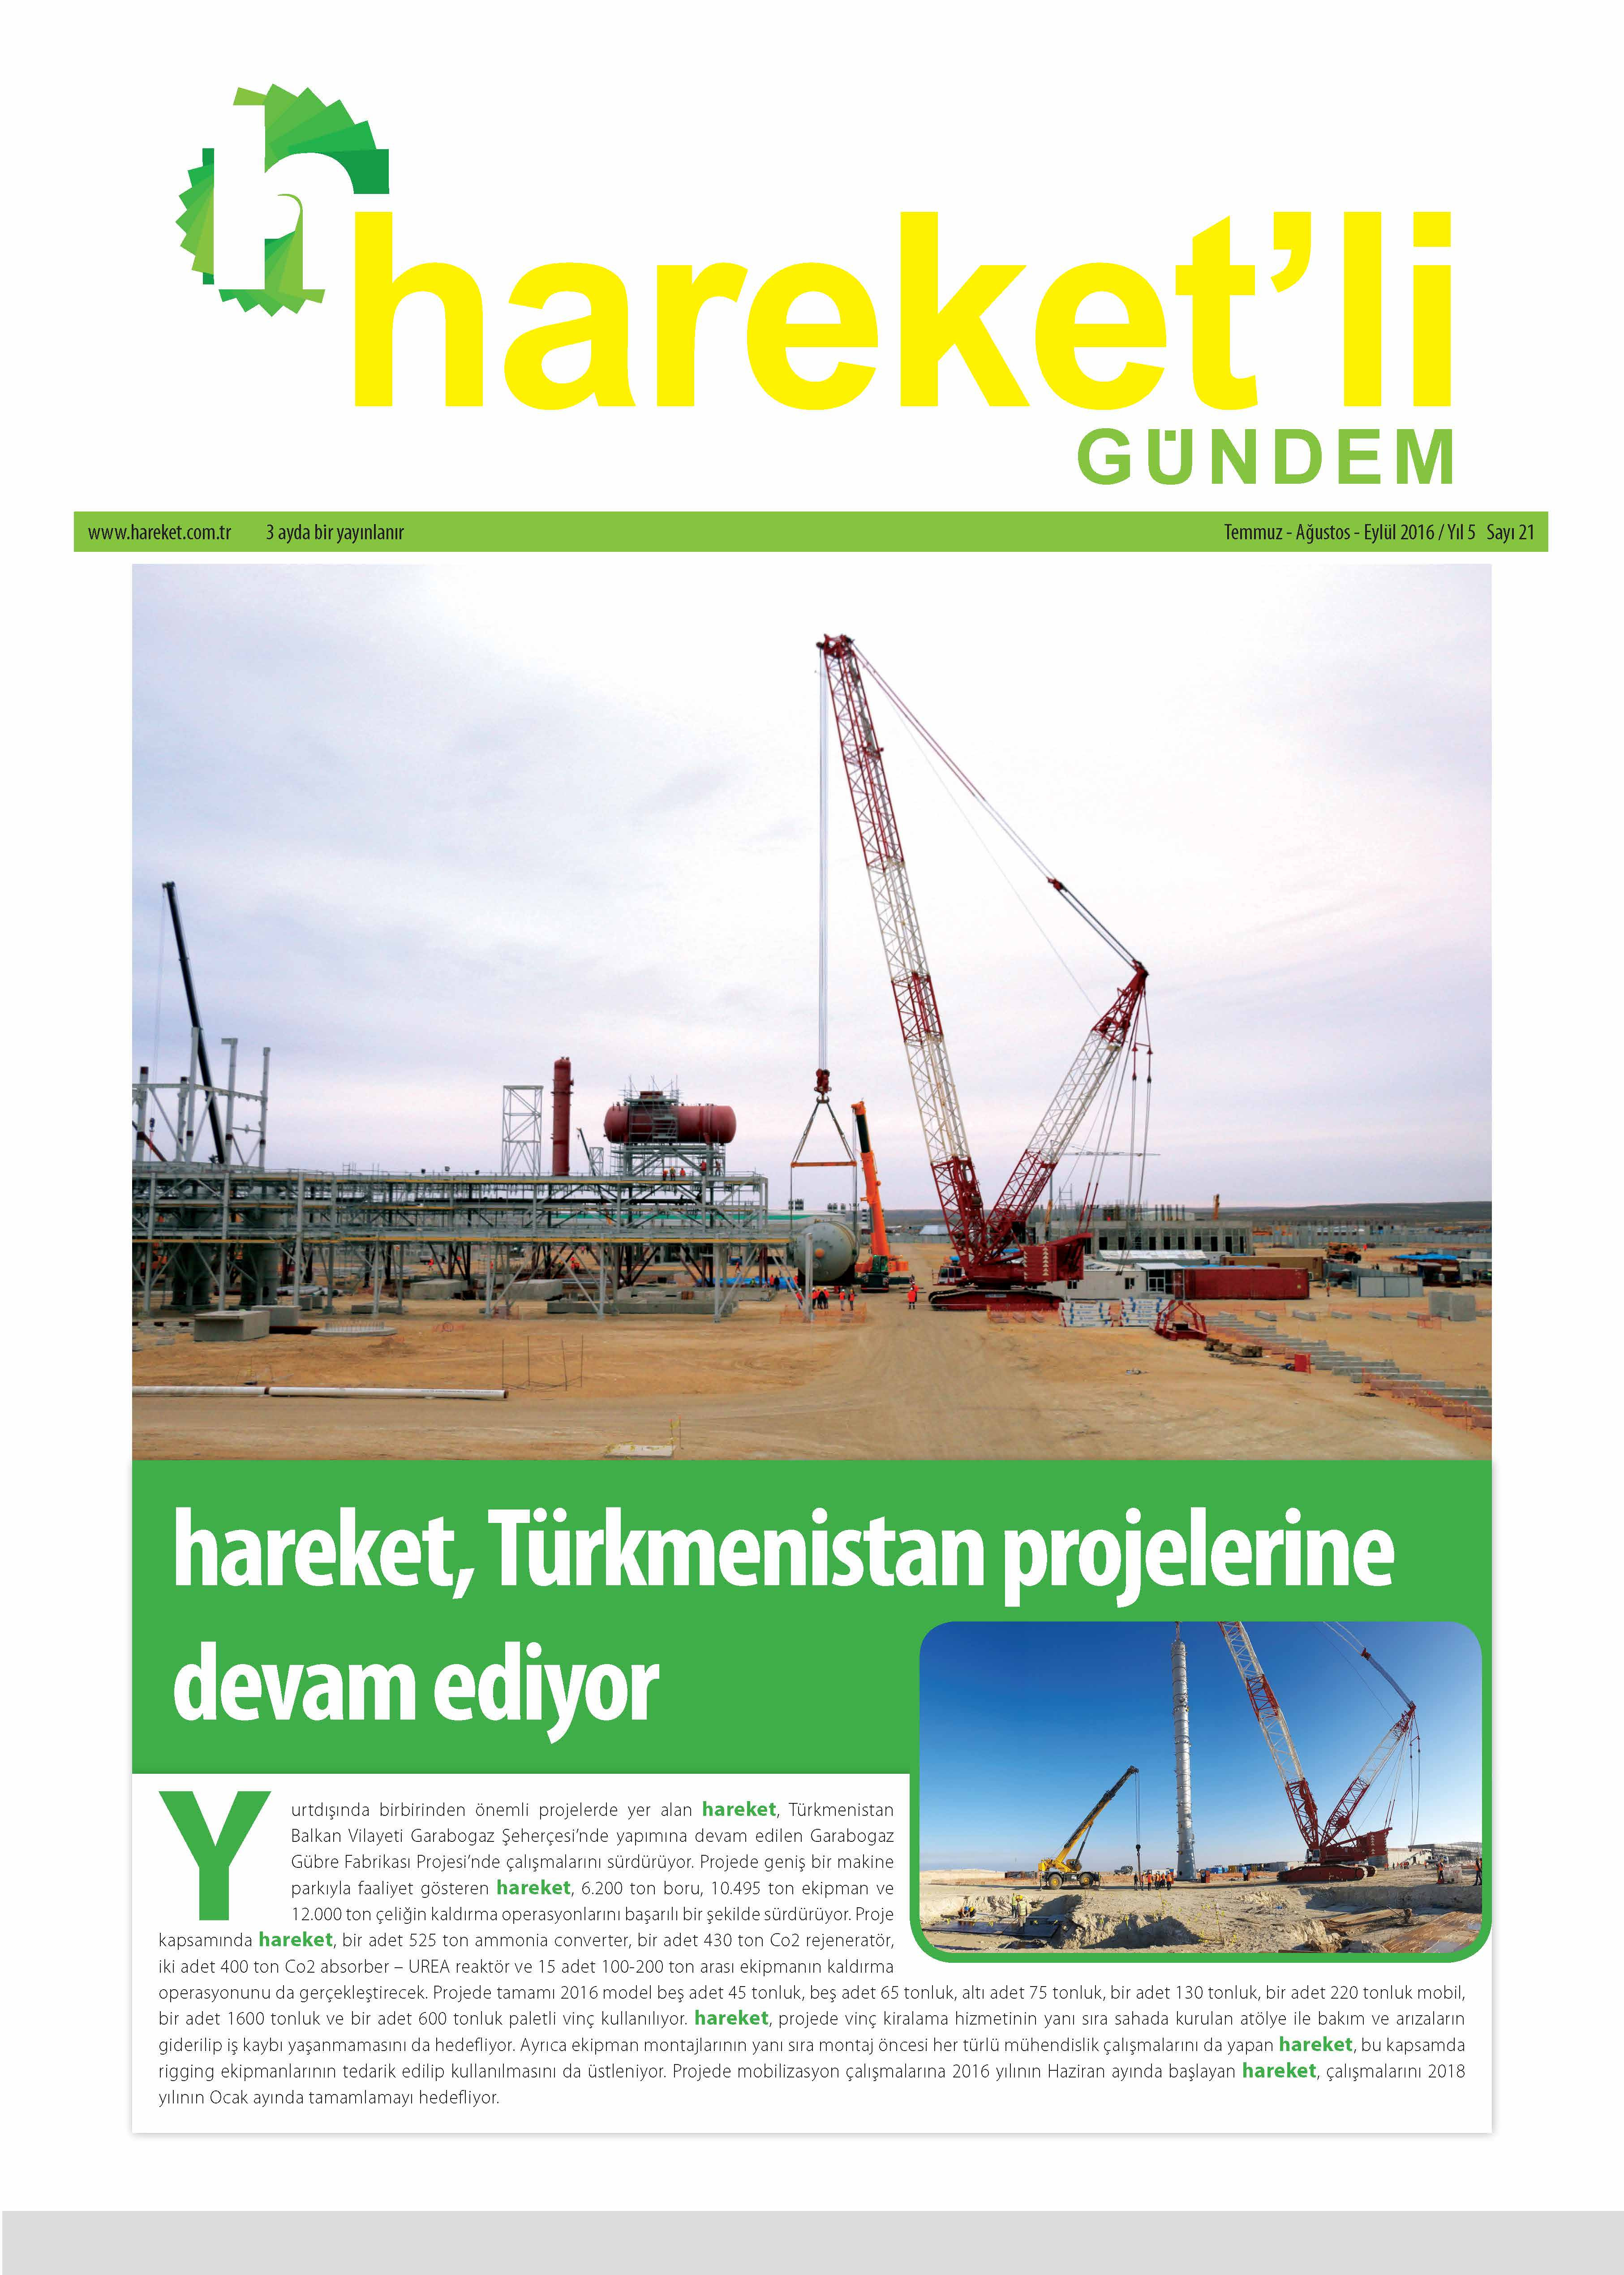 Hareket'li Gündem Magazine - ISSEU 21